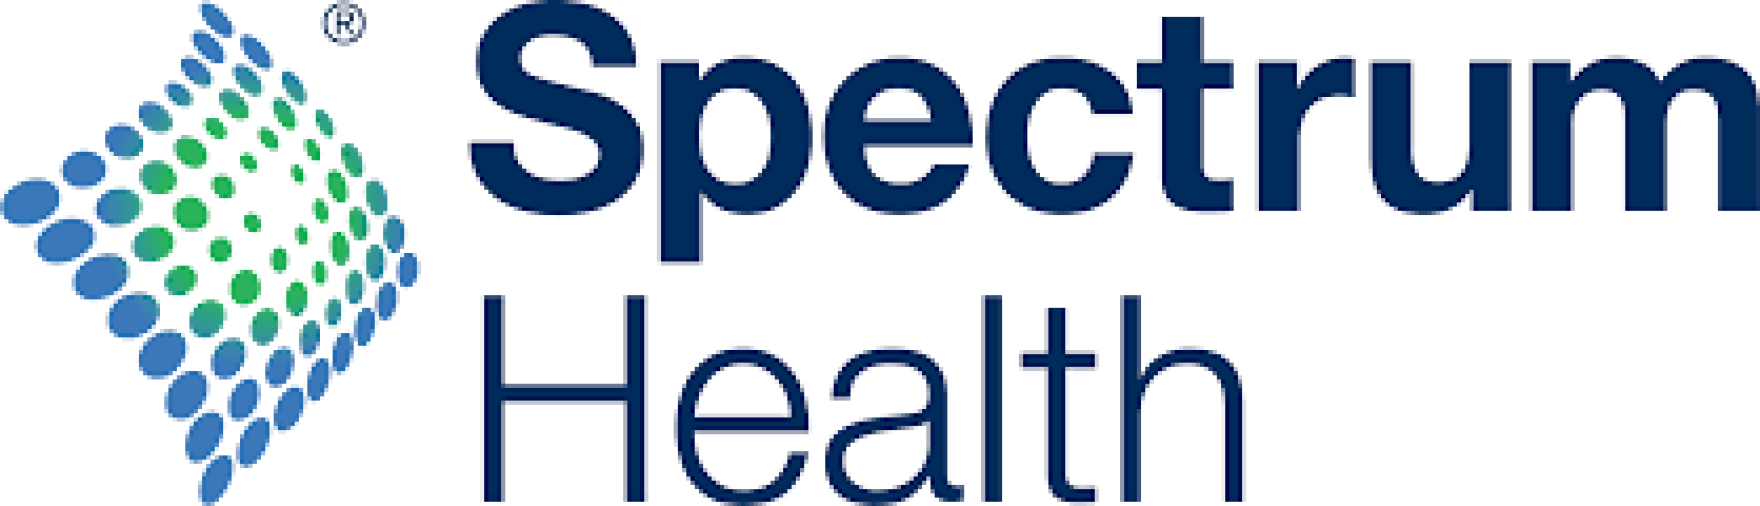 Spectrum Health logo.